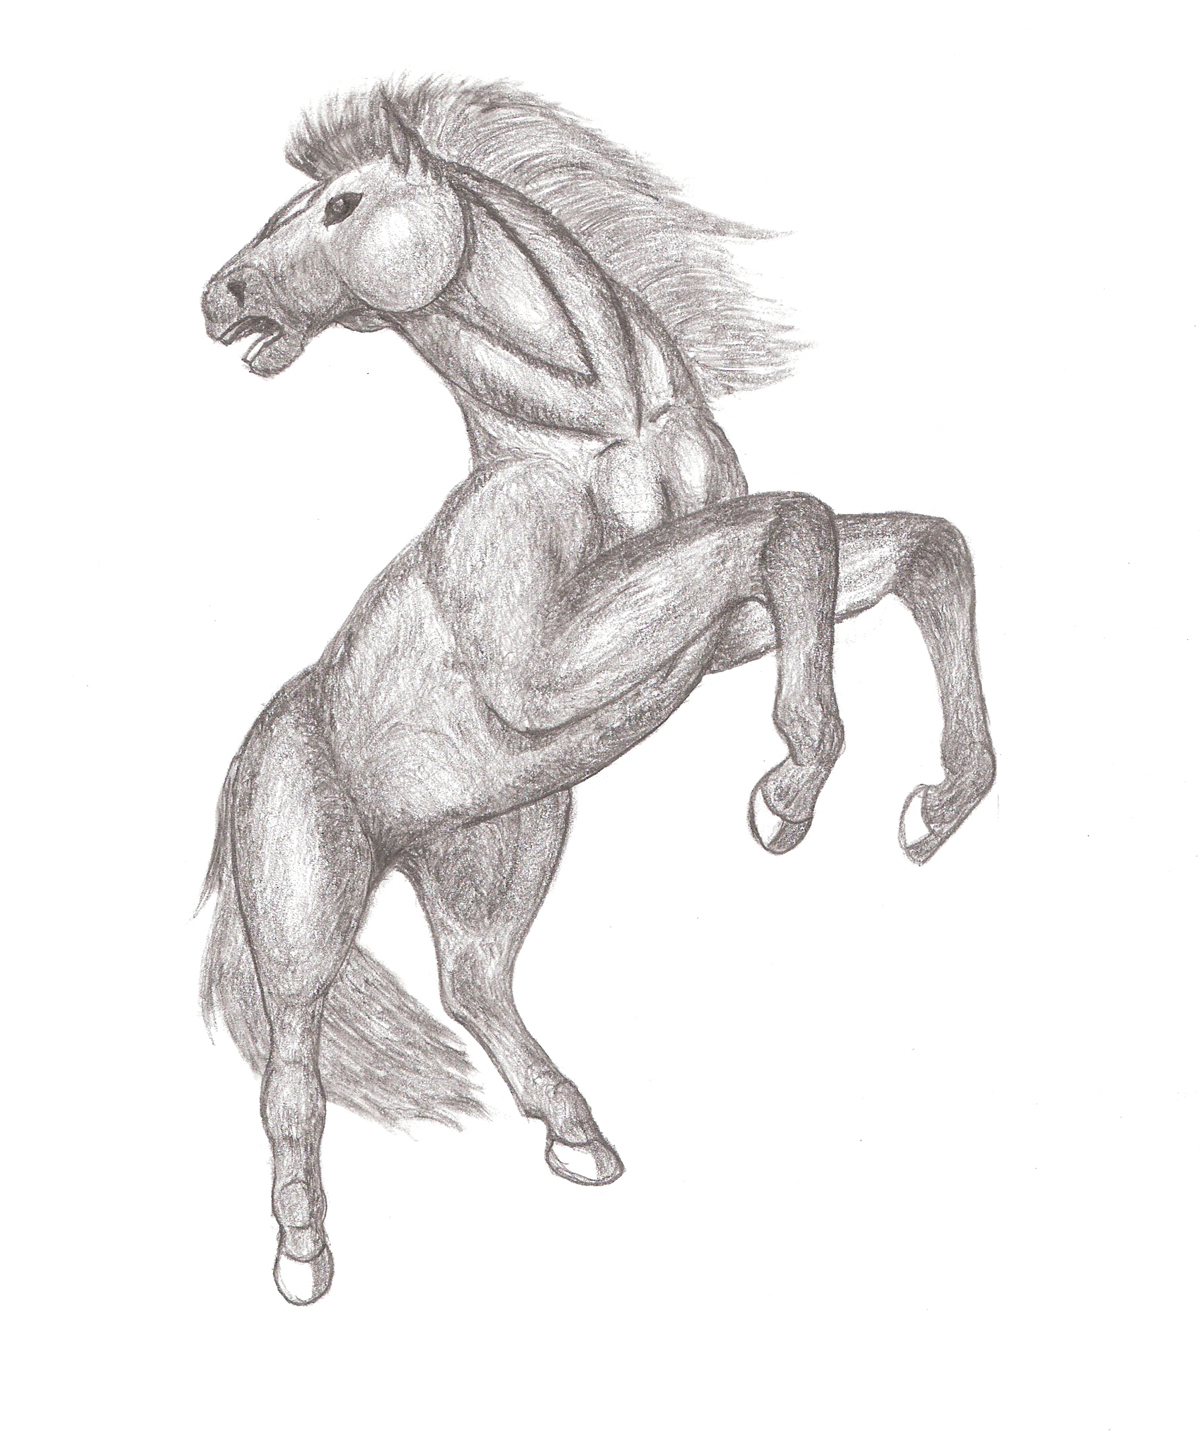 Rearing Horse Sketch